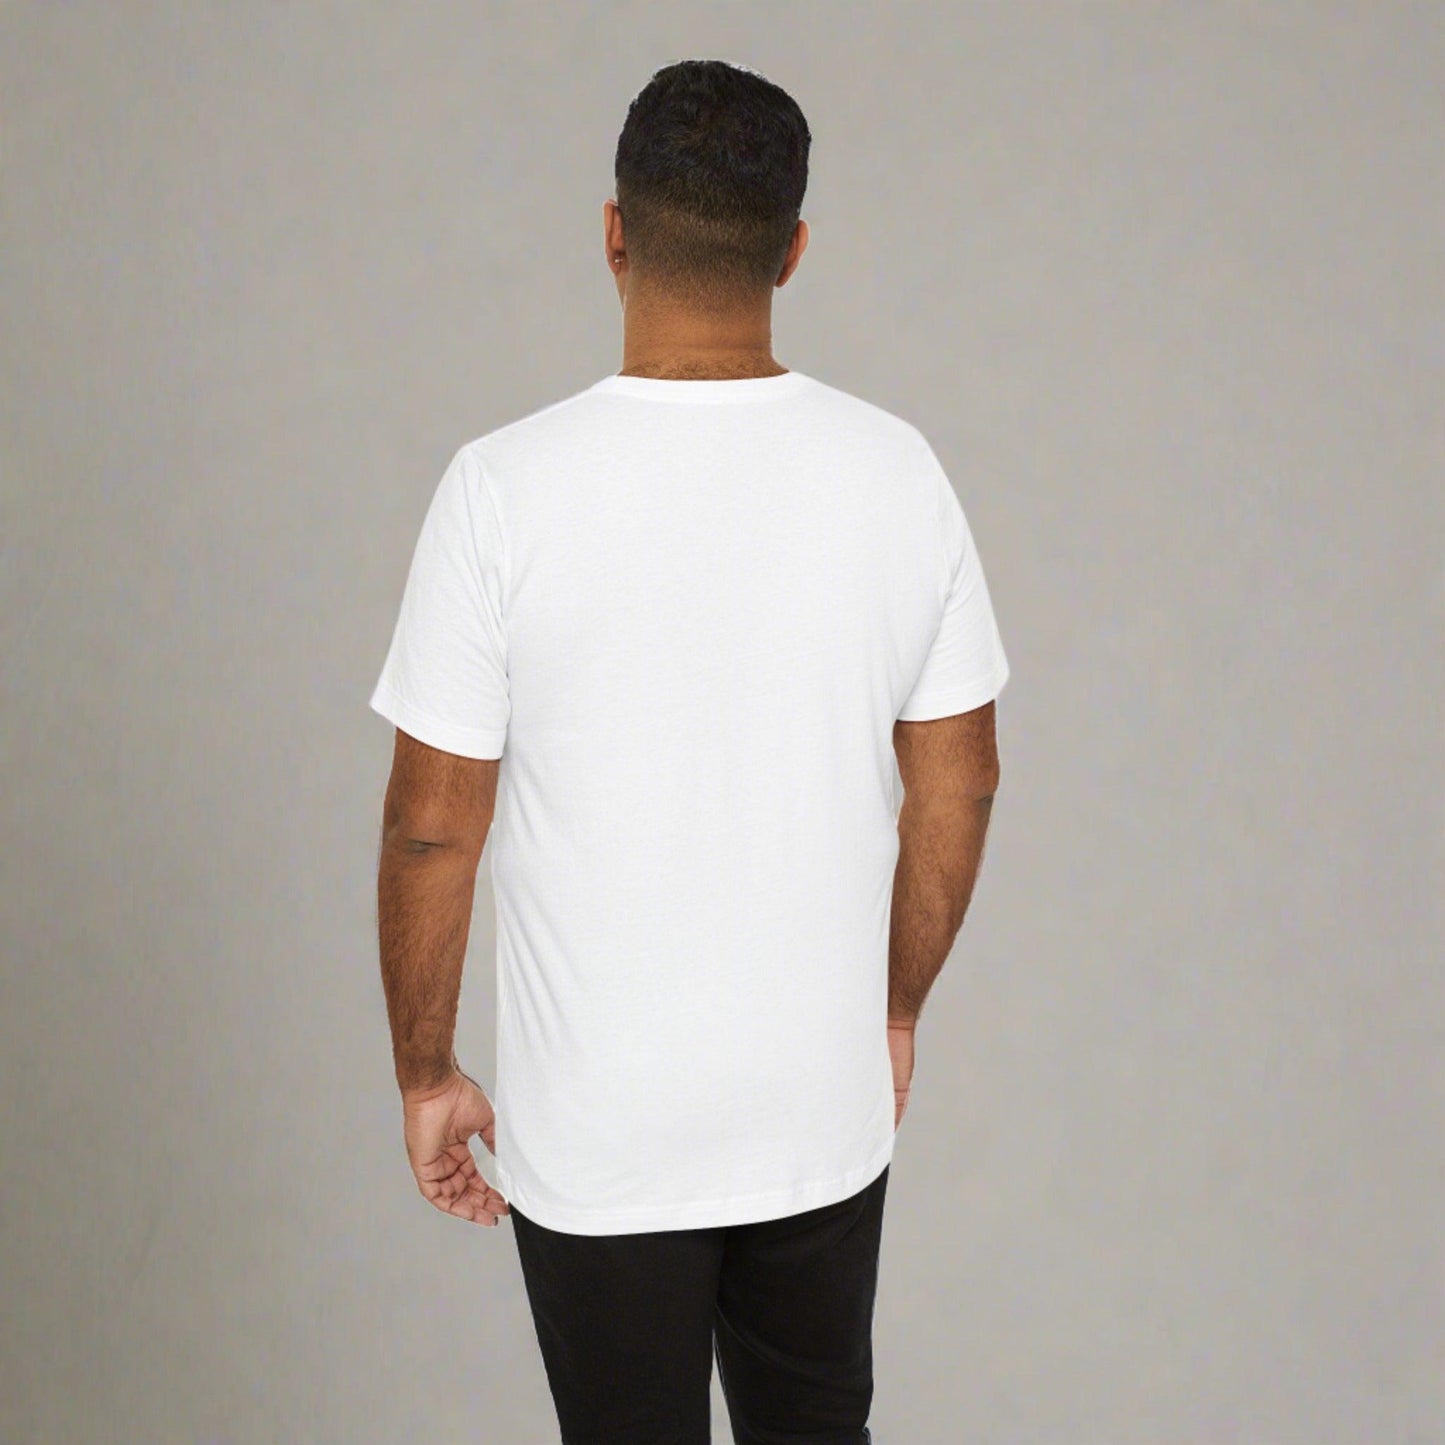 Men's White T Shirts Premium Casual Short Sleeve Classic Fit Crew Neck Shirts